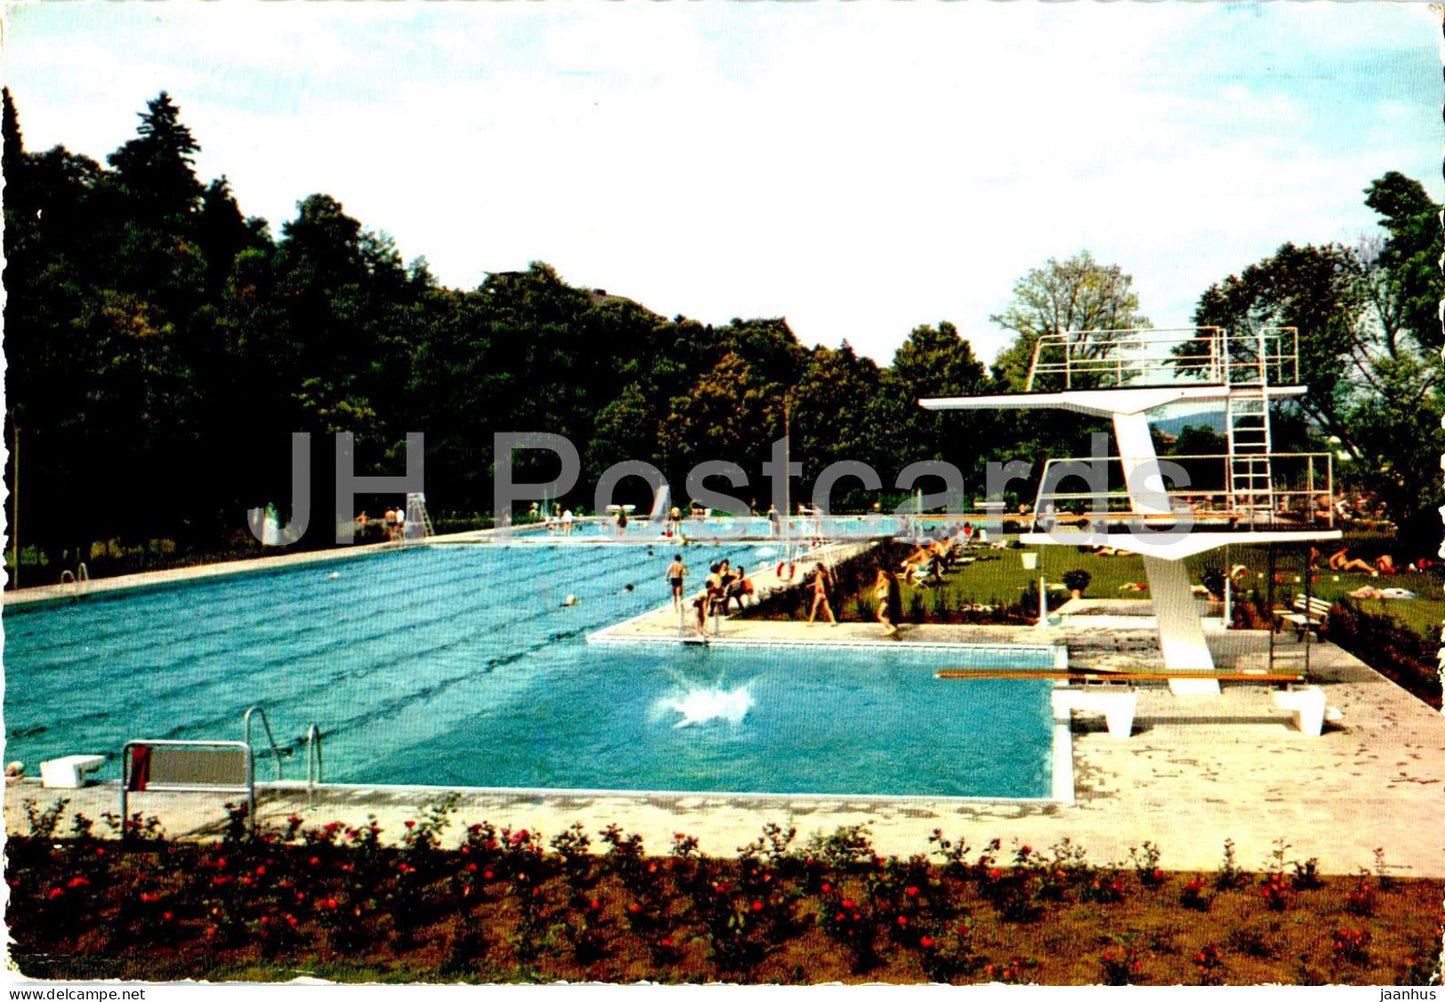 Schwimmbad im Luftkurort Lauterbach - pool - 1969 - Germany - used - JH Postcards